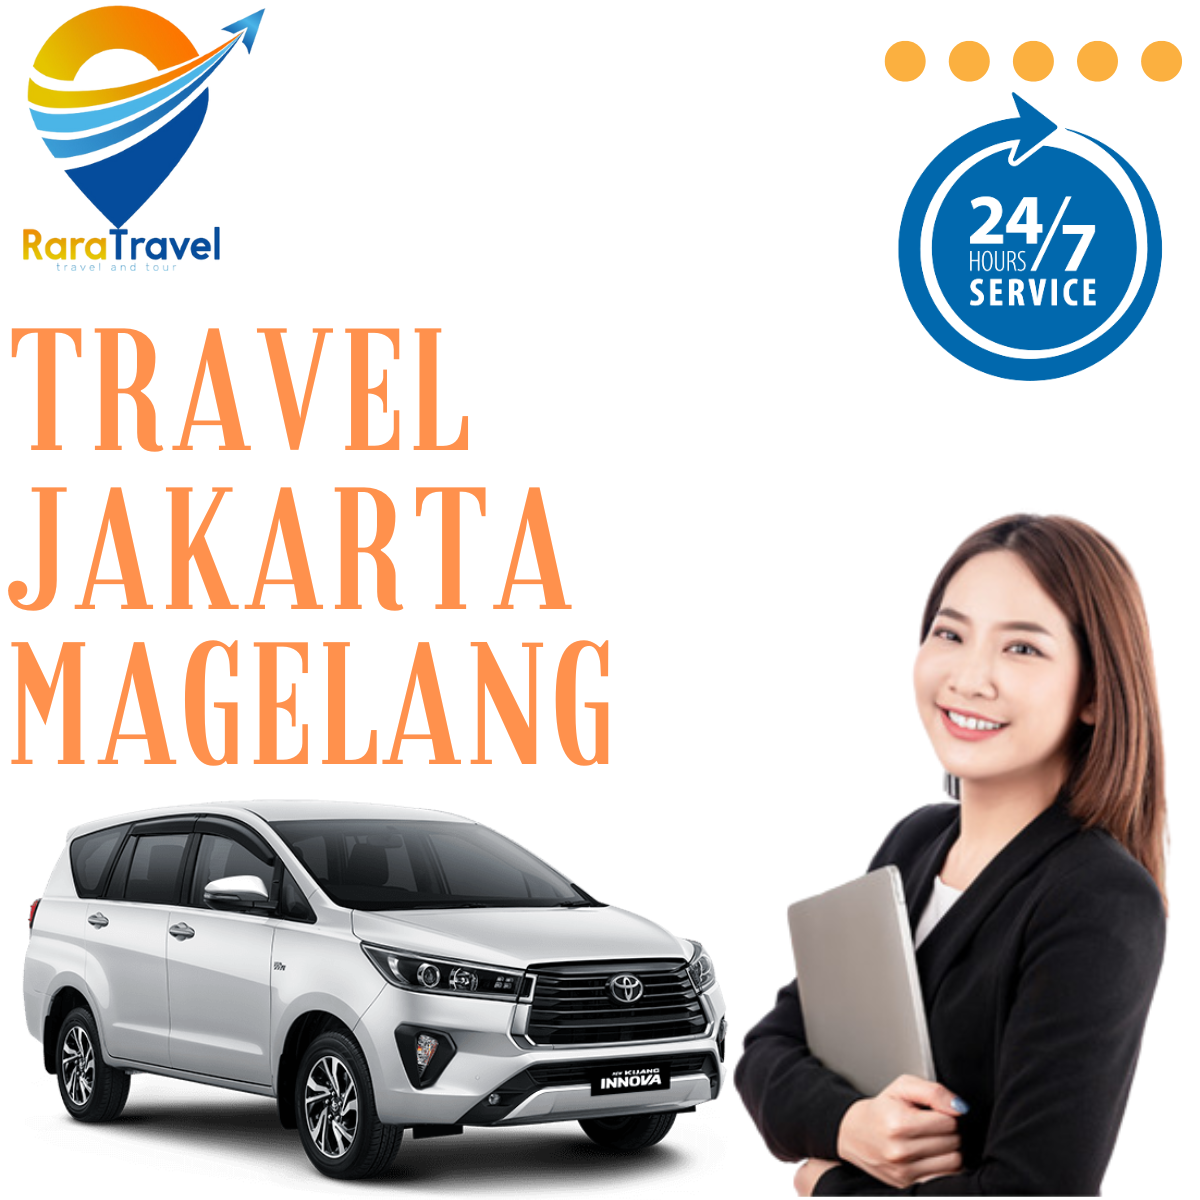 Travel Jakarta Magelang Harga Tiket Murah PP Hiace via TOLL